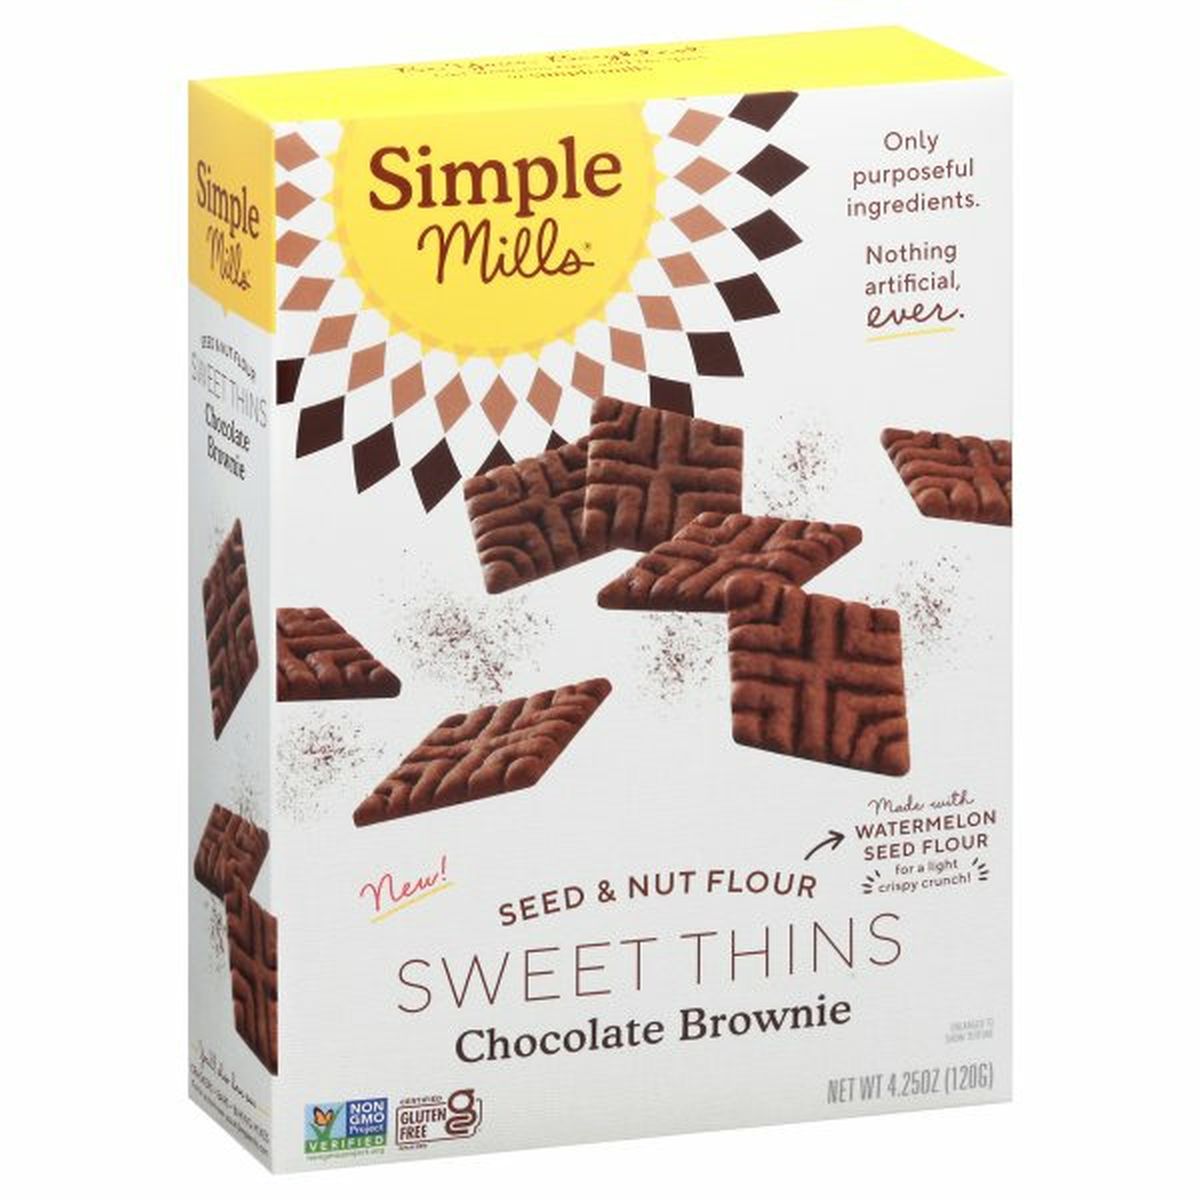 Calories in Simple Mills Sweet Thins, Chocolate Brownie, Seed & Nut Flour